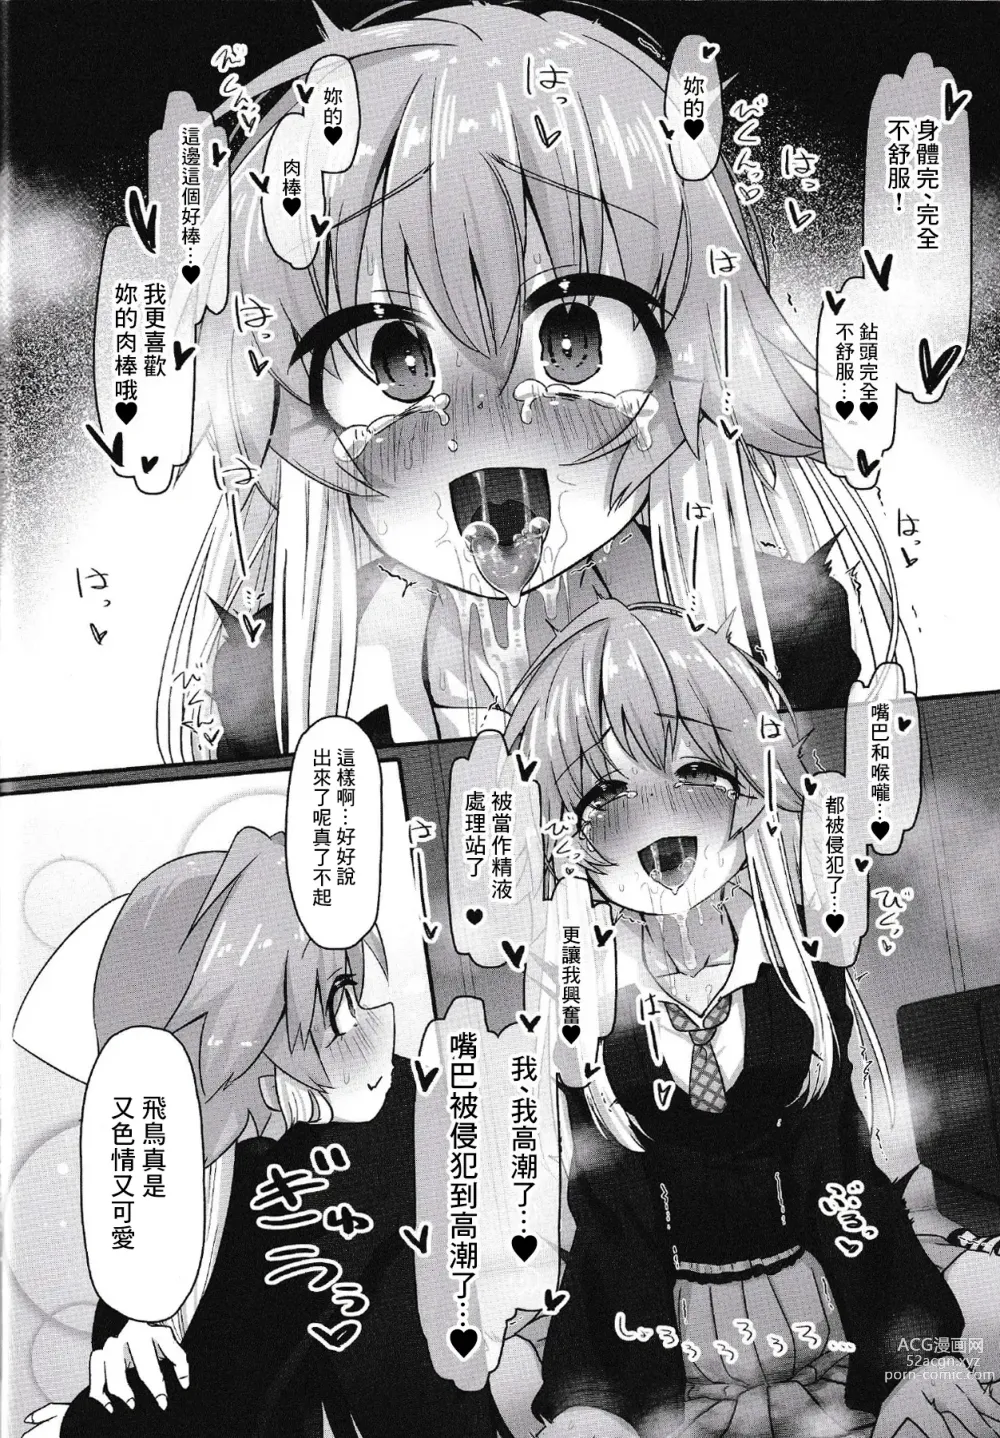 Page 9 of doujinshi Hentai Sekai no Seikou Ron <Trotology> Exte